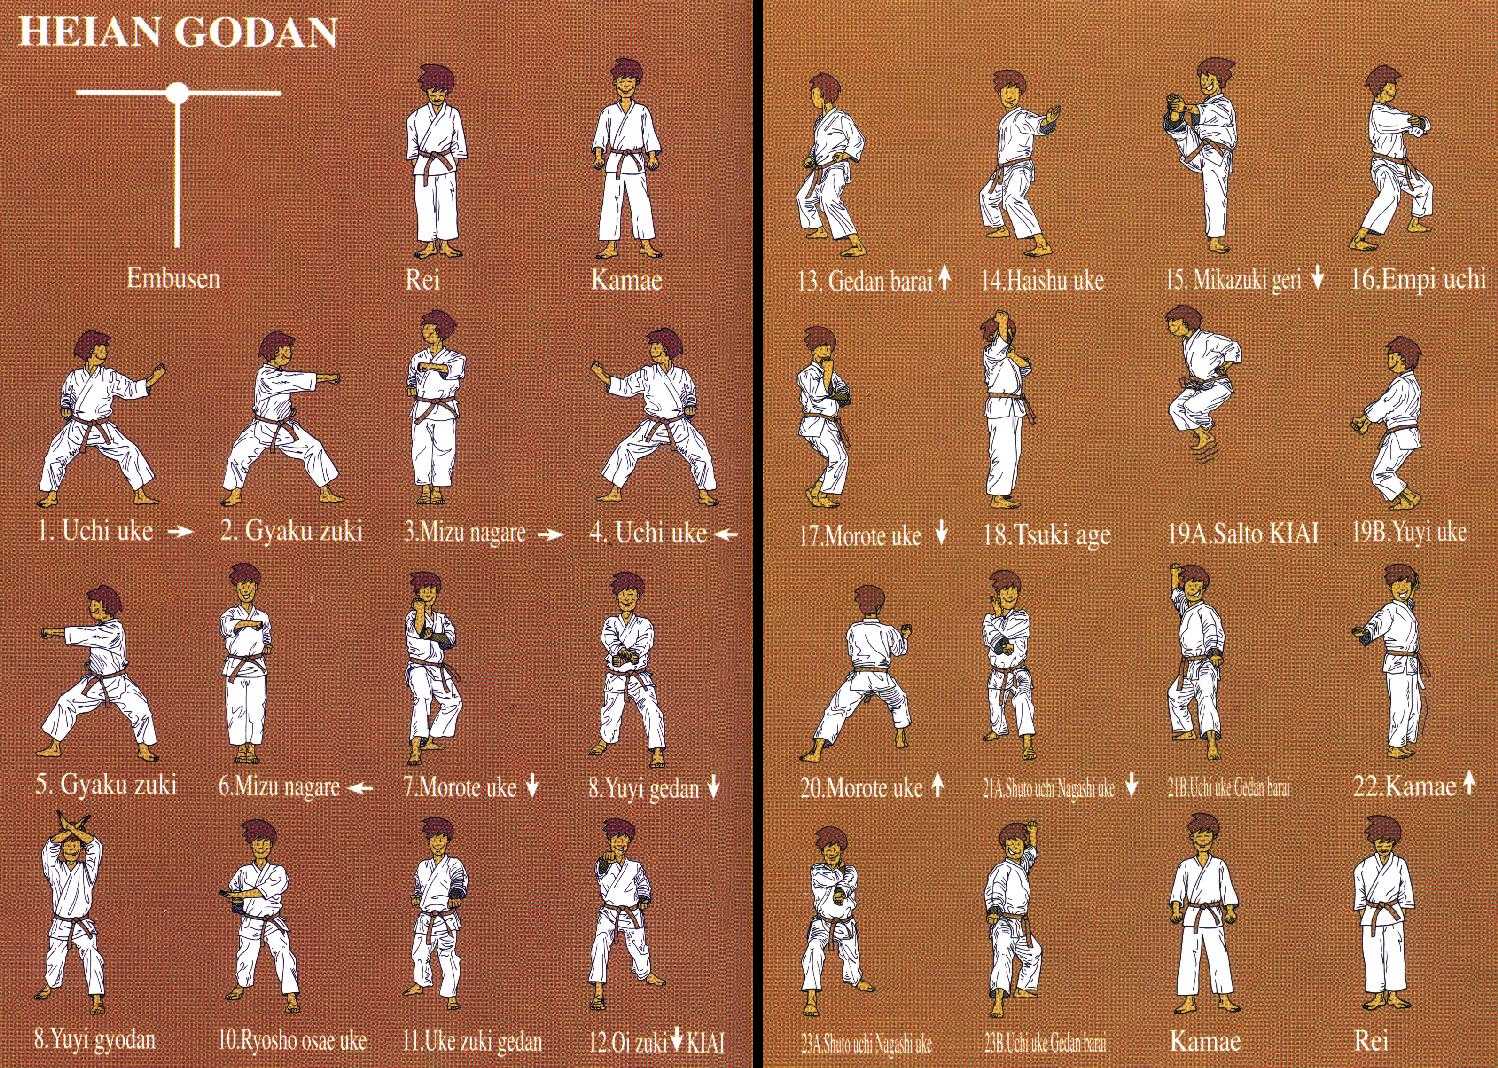 Kata Heian Godan : Learning Karate At Home (1.2.5) ~ LEARNING EVERY